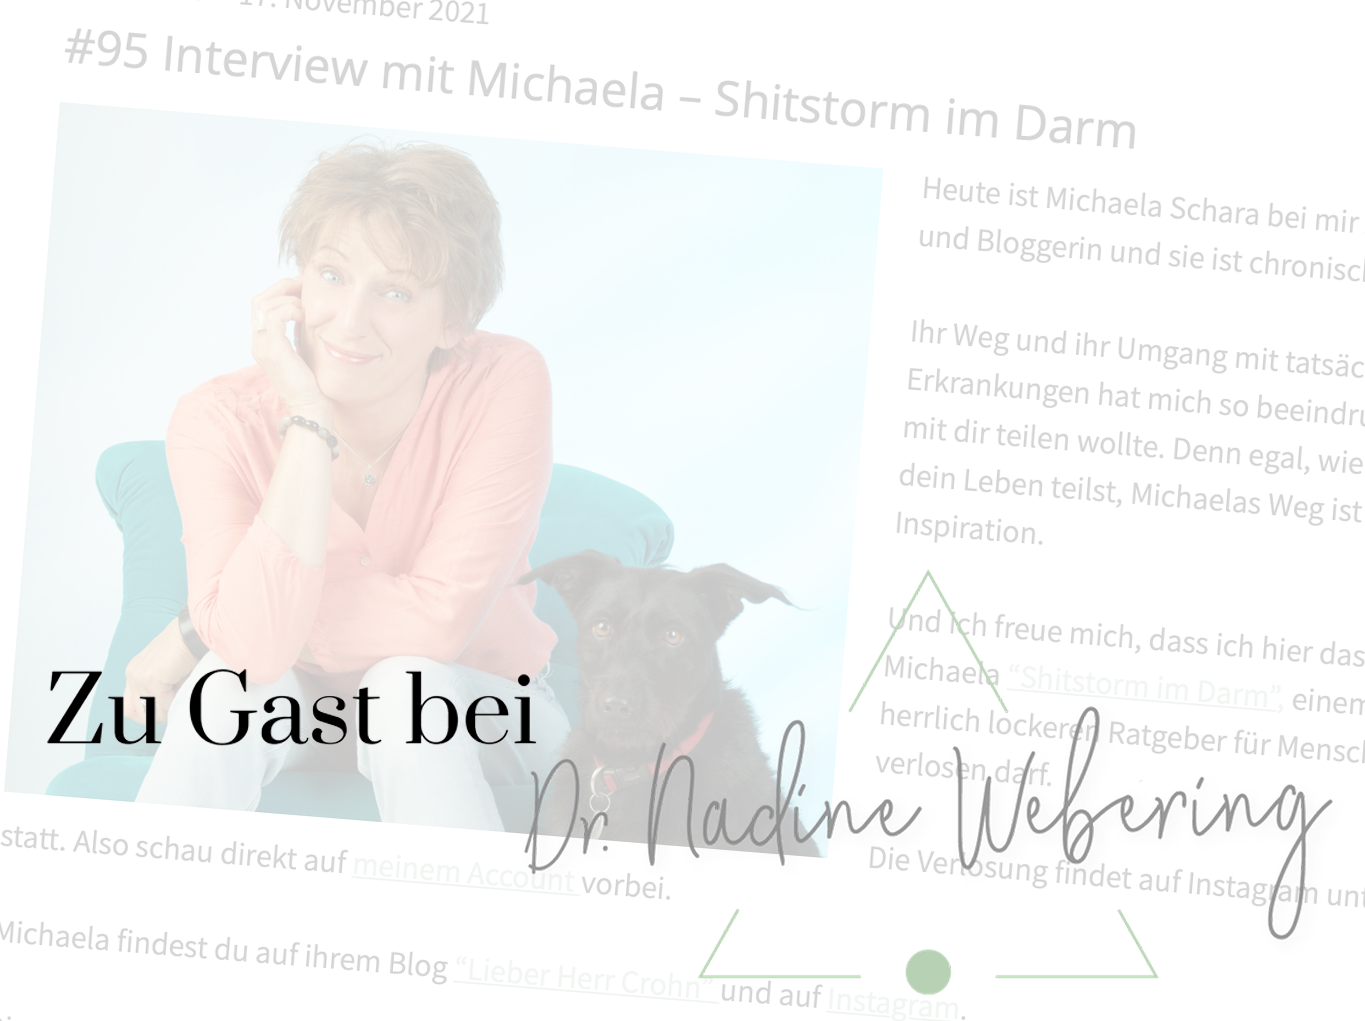 PodcastNadineWebering - Podcast-Interview: Bauch trifft Kopf!